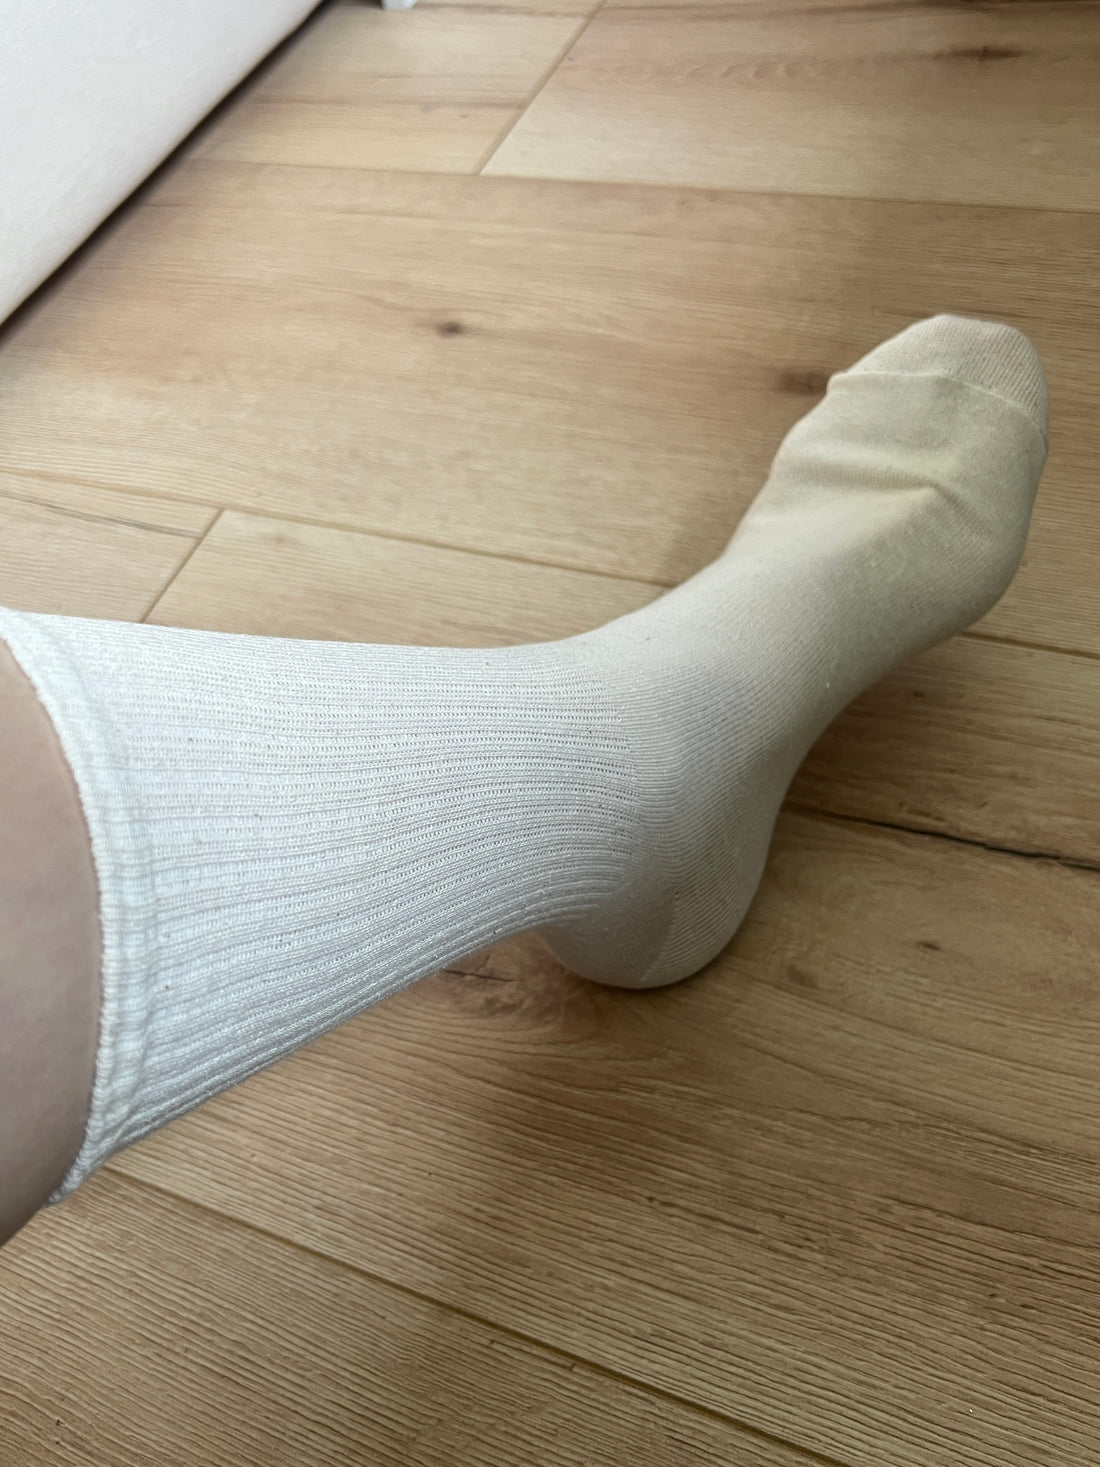 HEMP Socks long for Women Set of 9 pairs